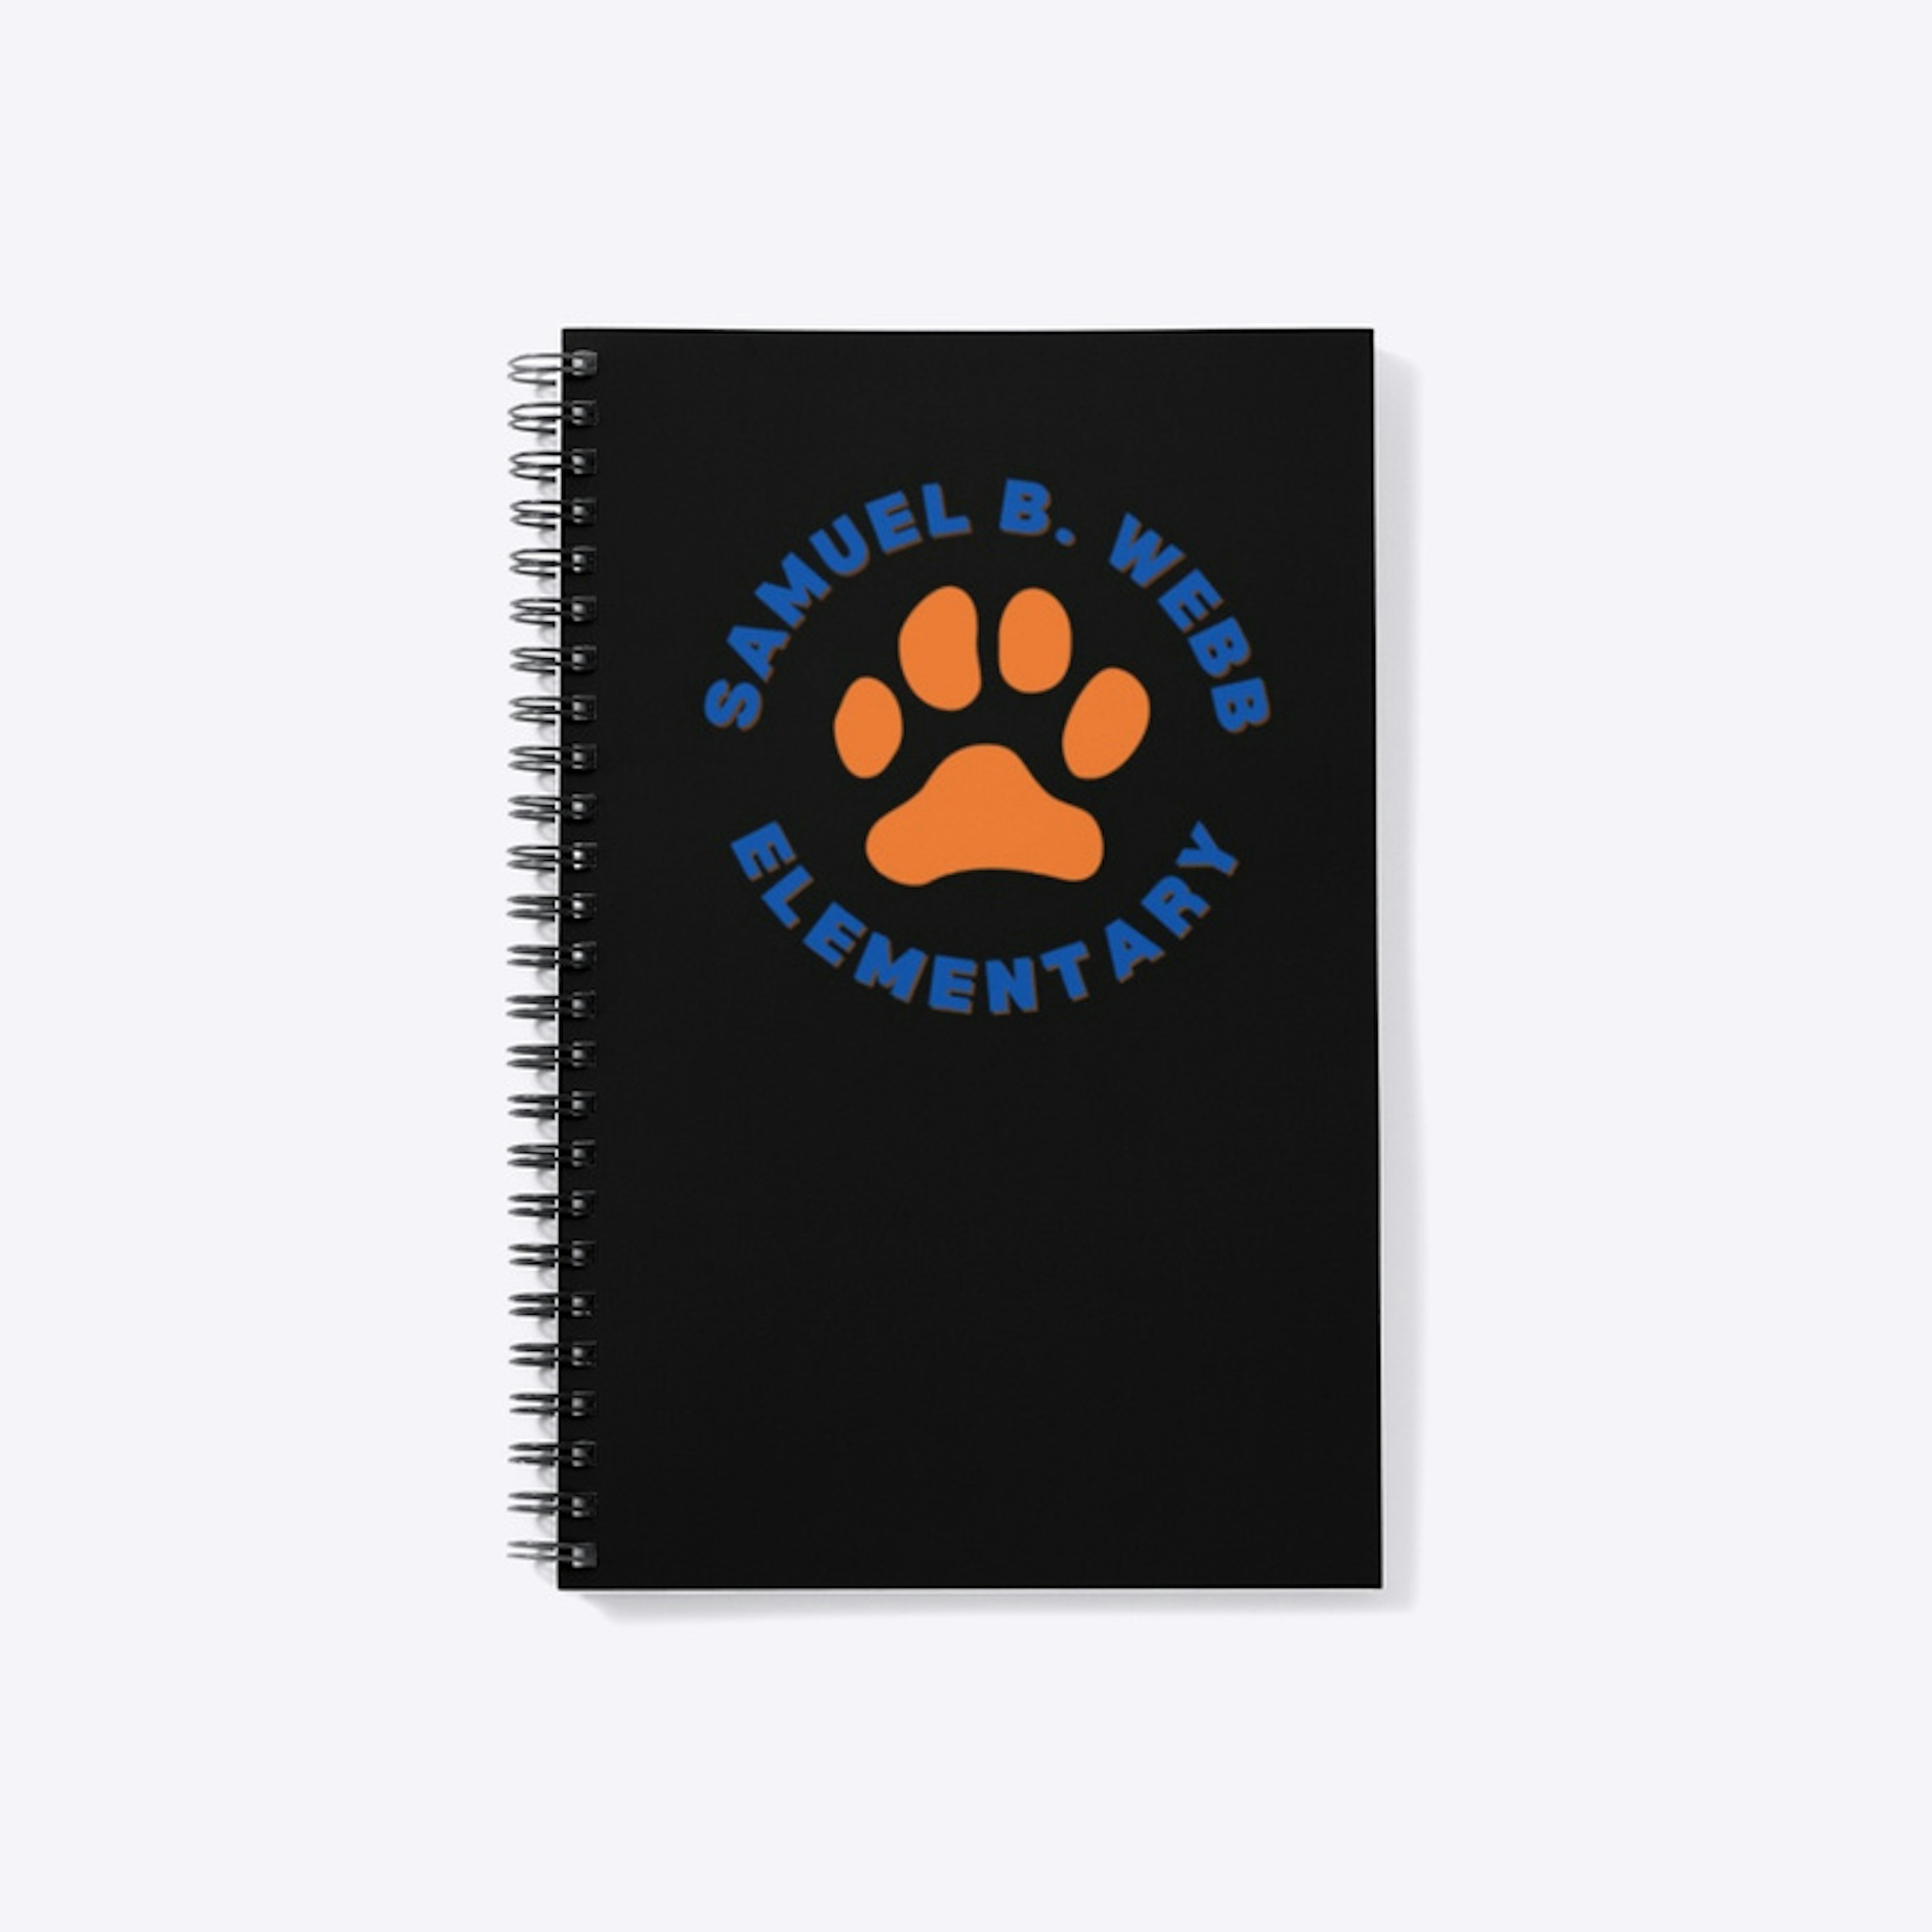 Webb Wildcats Notebook (multi color)